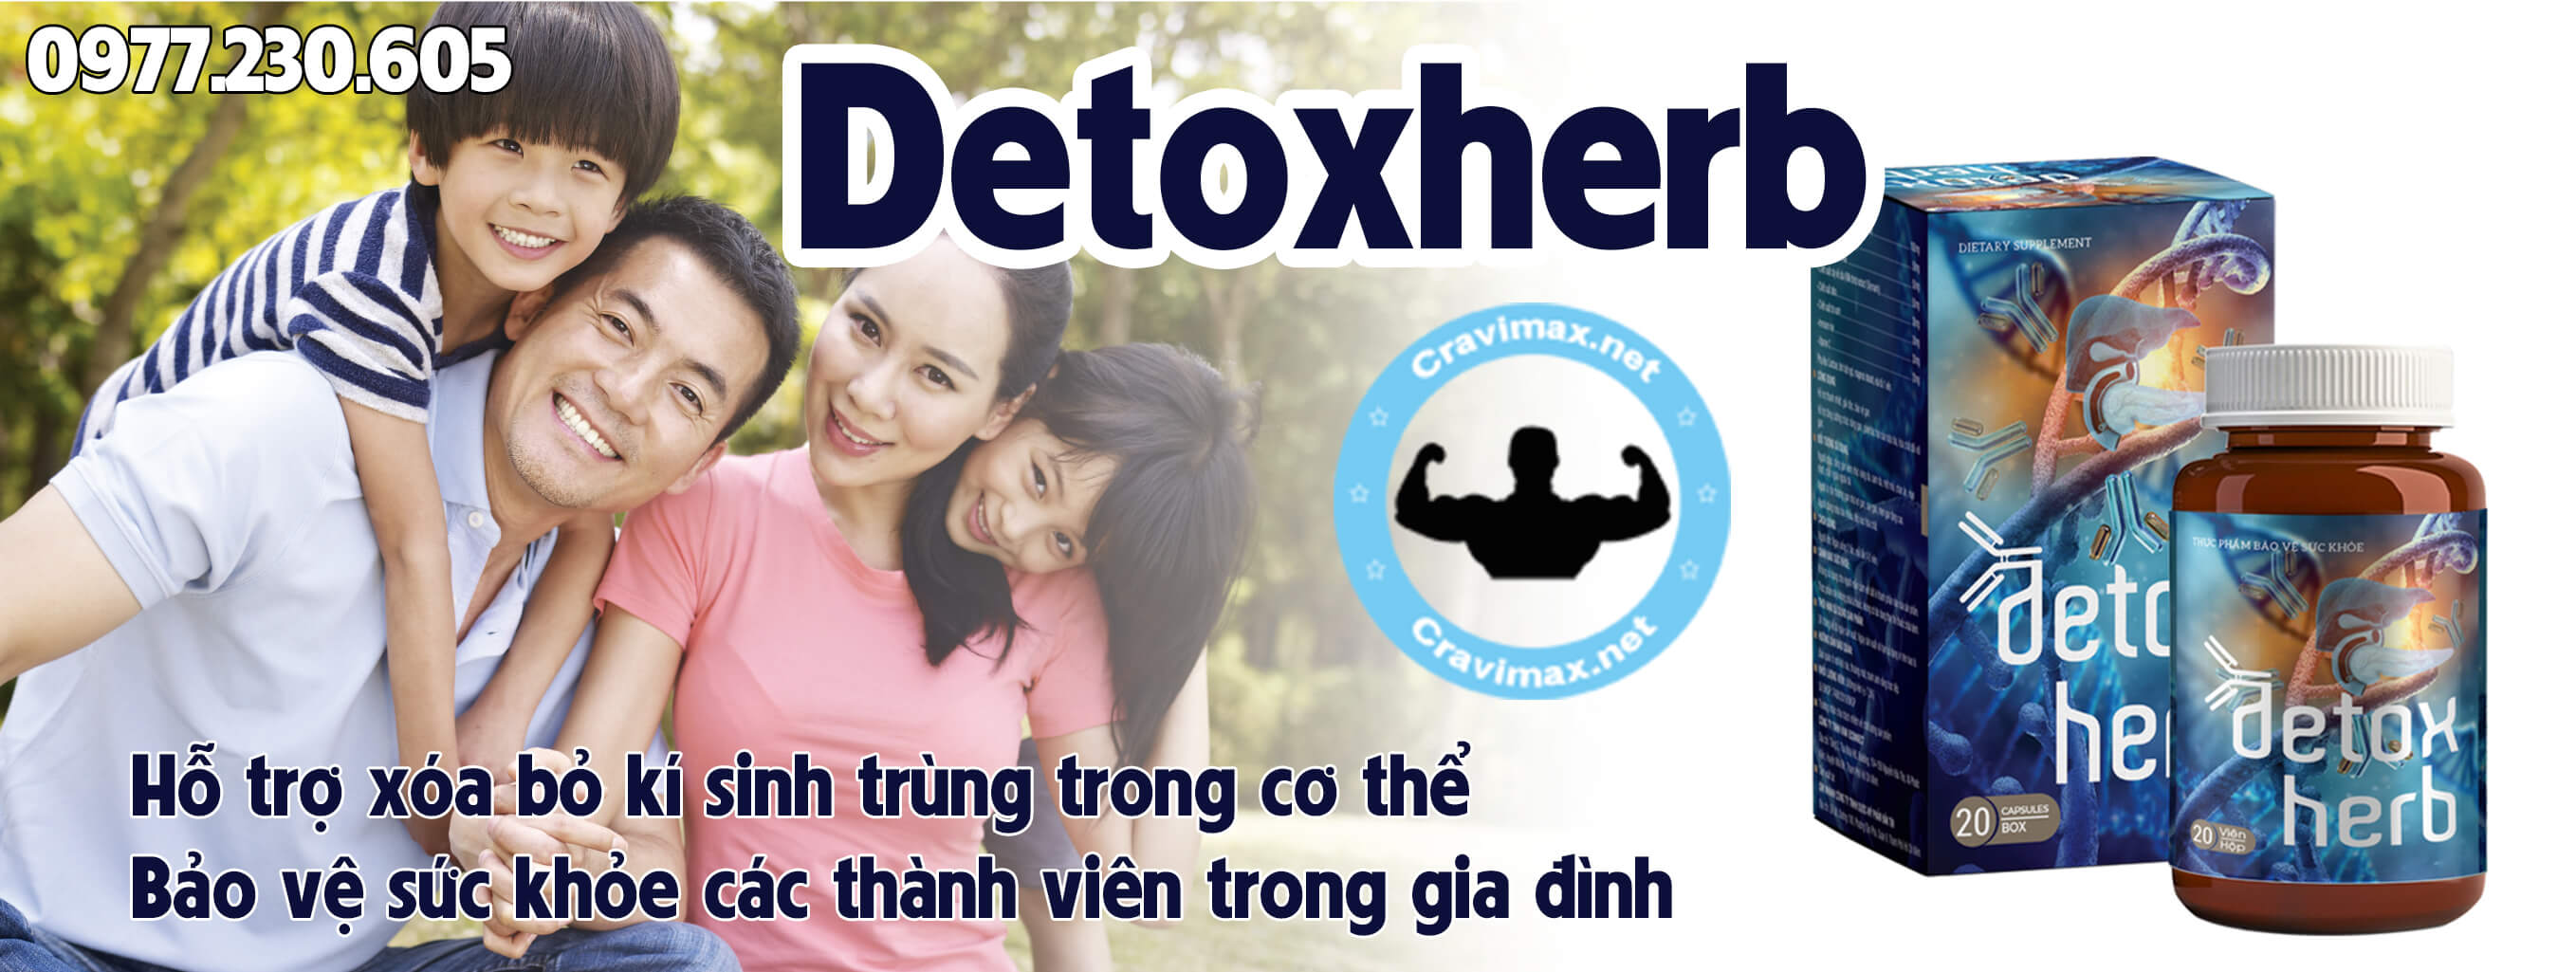 giới thiệu sản phẩm detoxherb